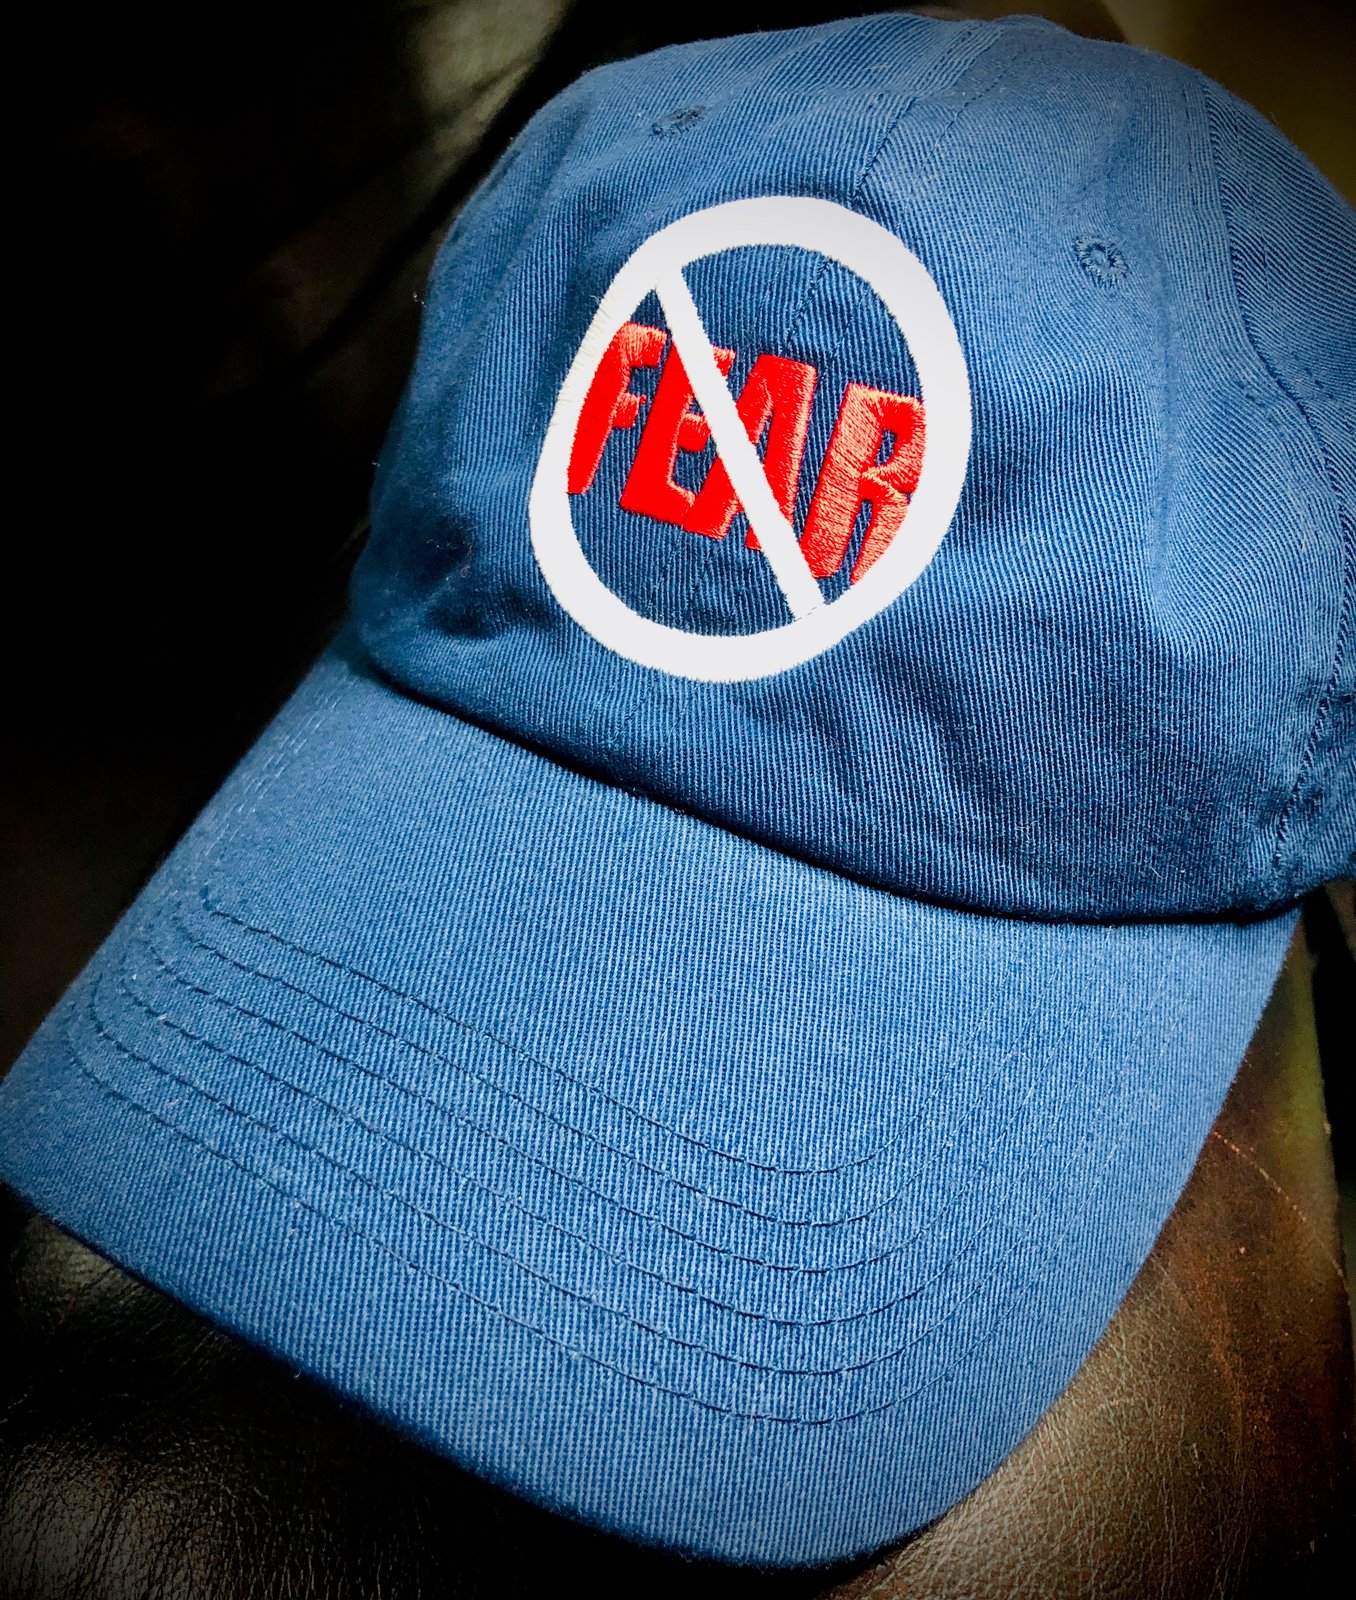 No Fear Dad Hat Unisex Cotton Hat Adjustable Baseball Cap 